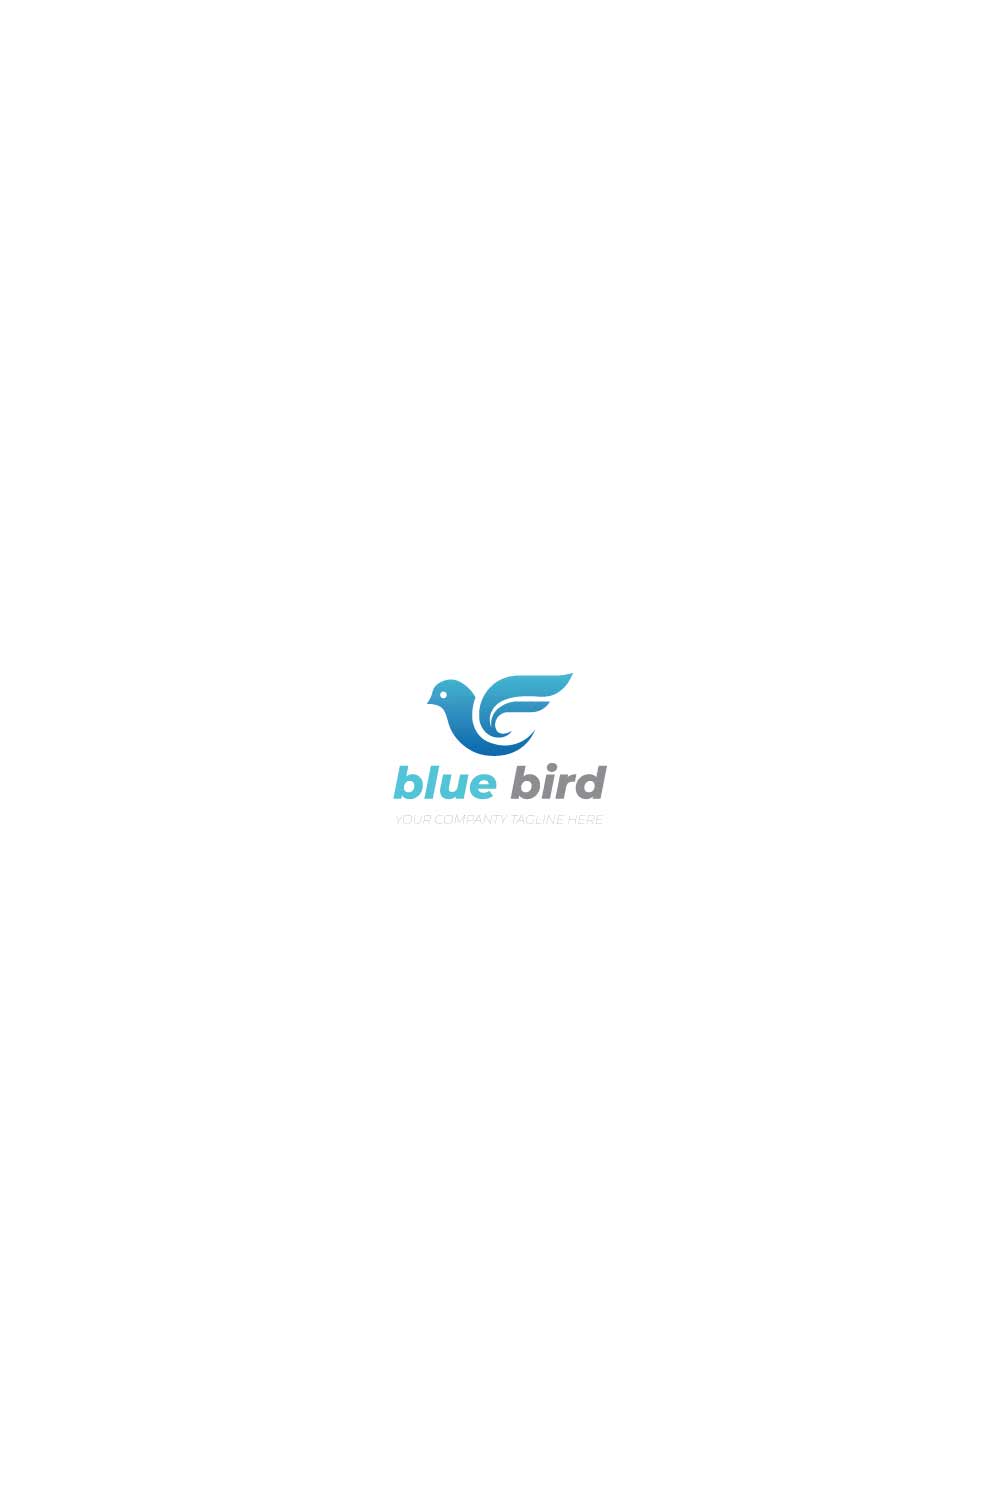 Blue bird logo design pinterest preview image.